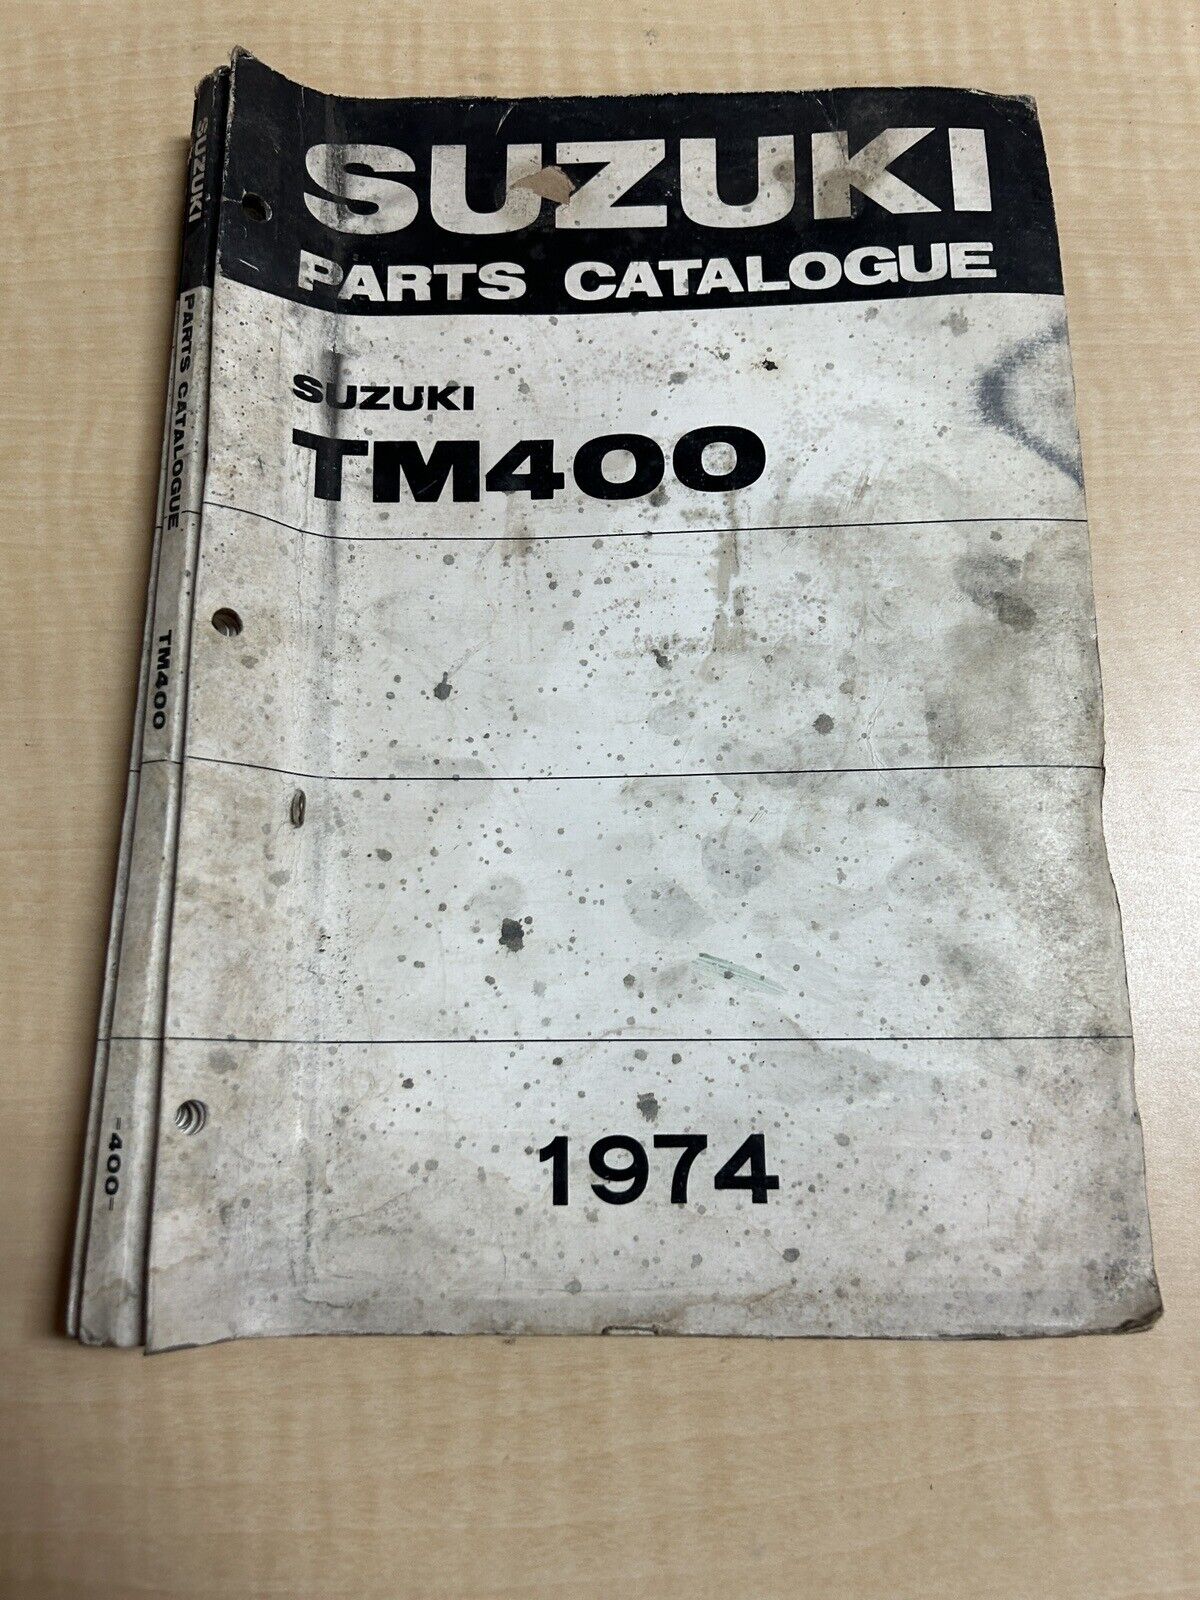 Suzuki Used 1974 TM400 Parts Catalogue Manual N. America 4th Edition S-1041